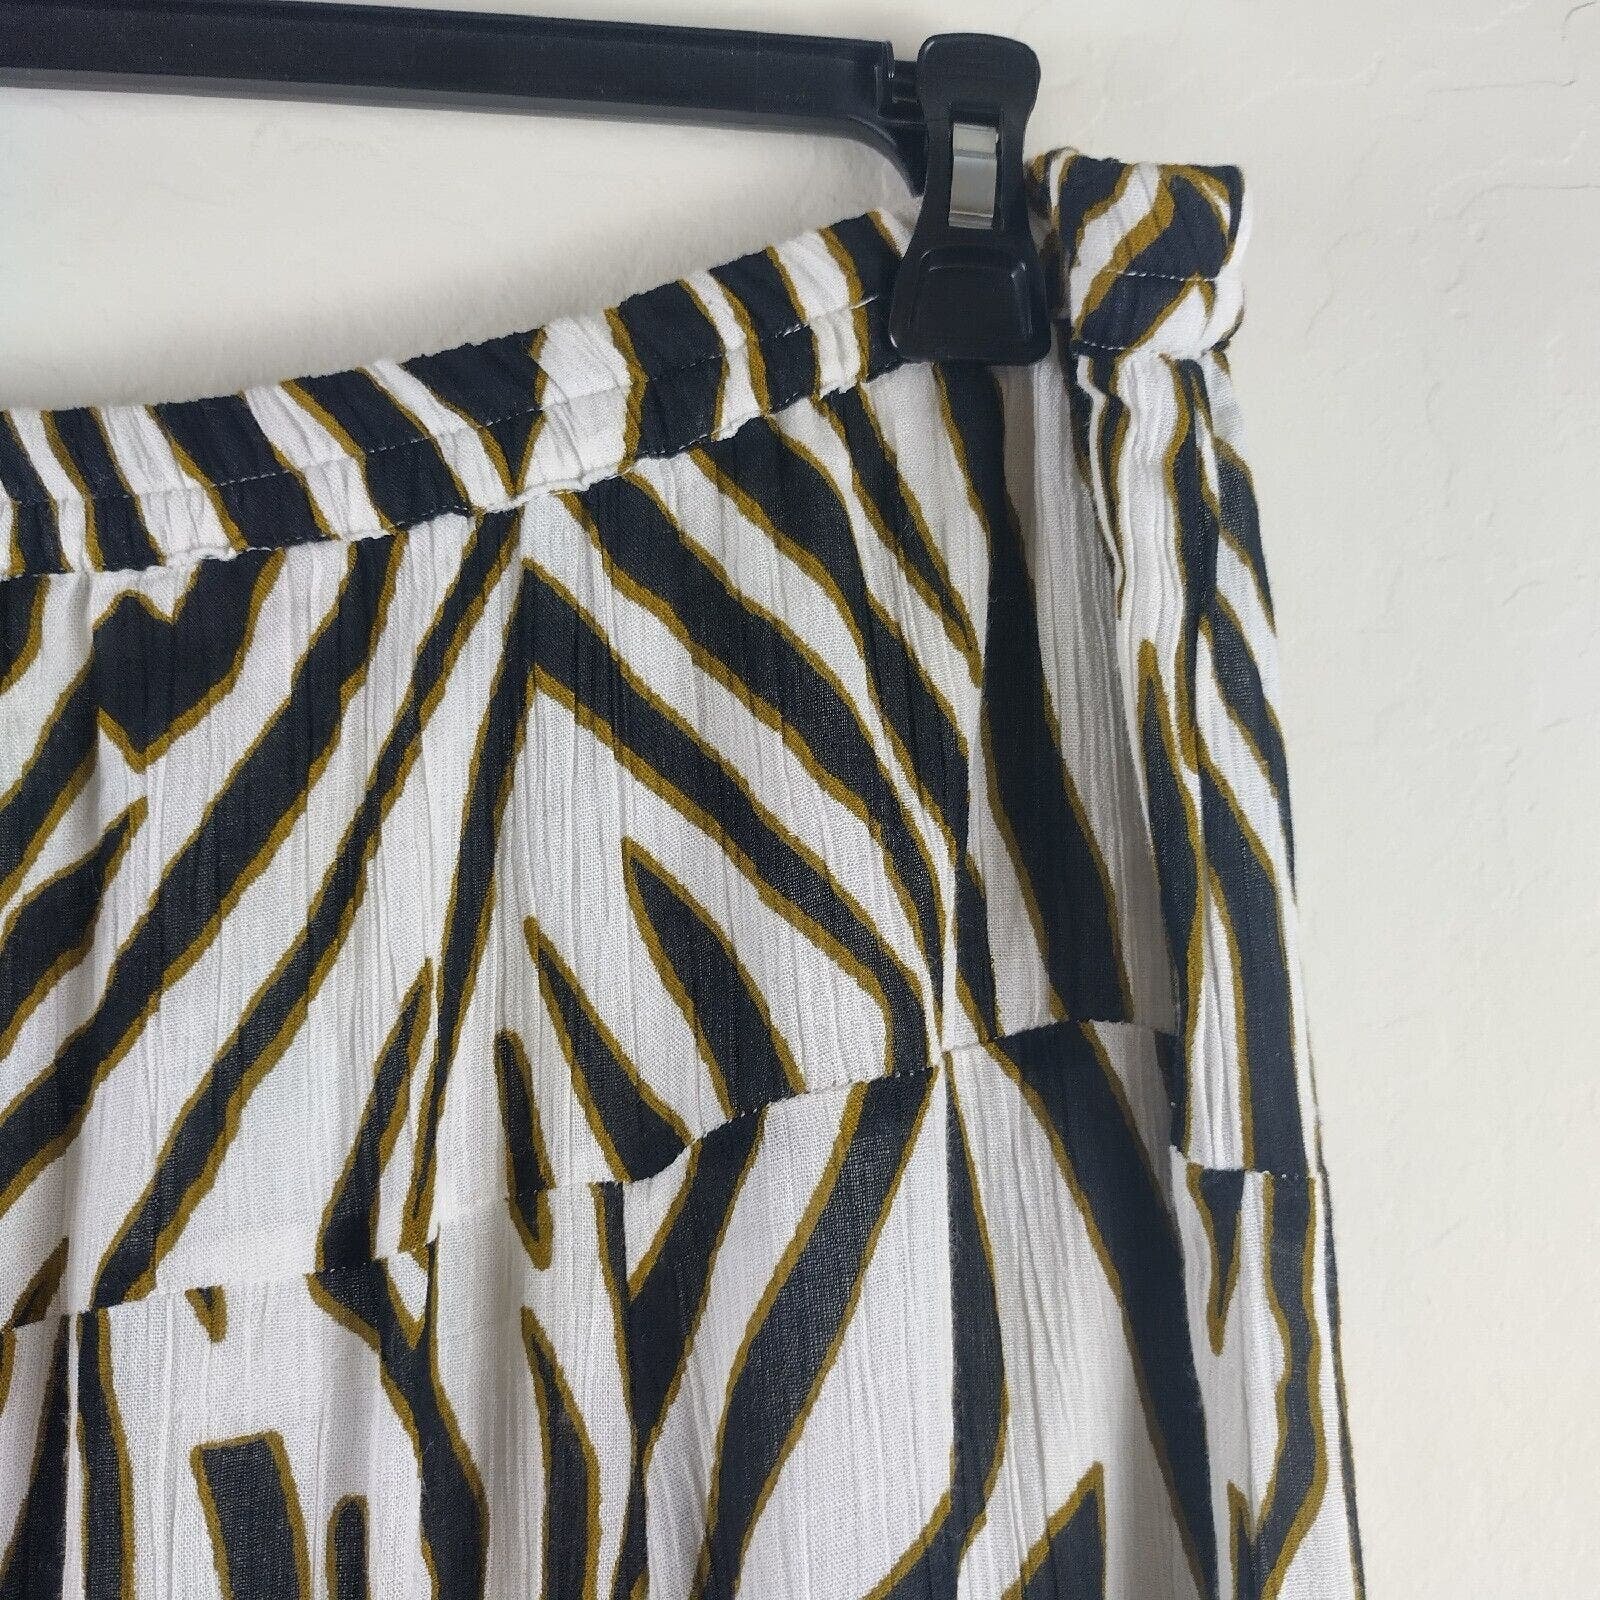 Soft Surroundings 1X zebra print boho elastic waist peasant skirt eWu21y95K